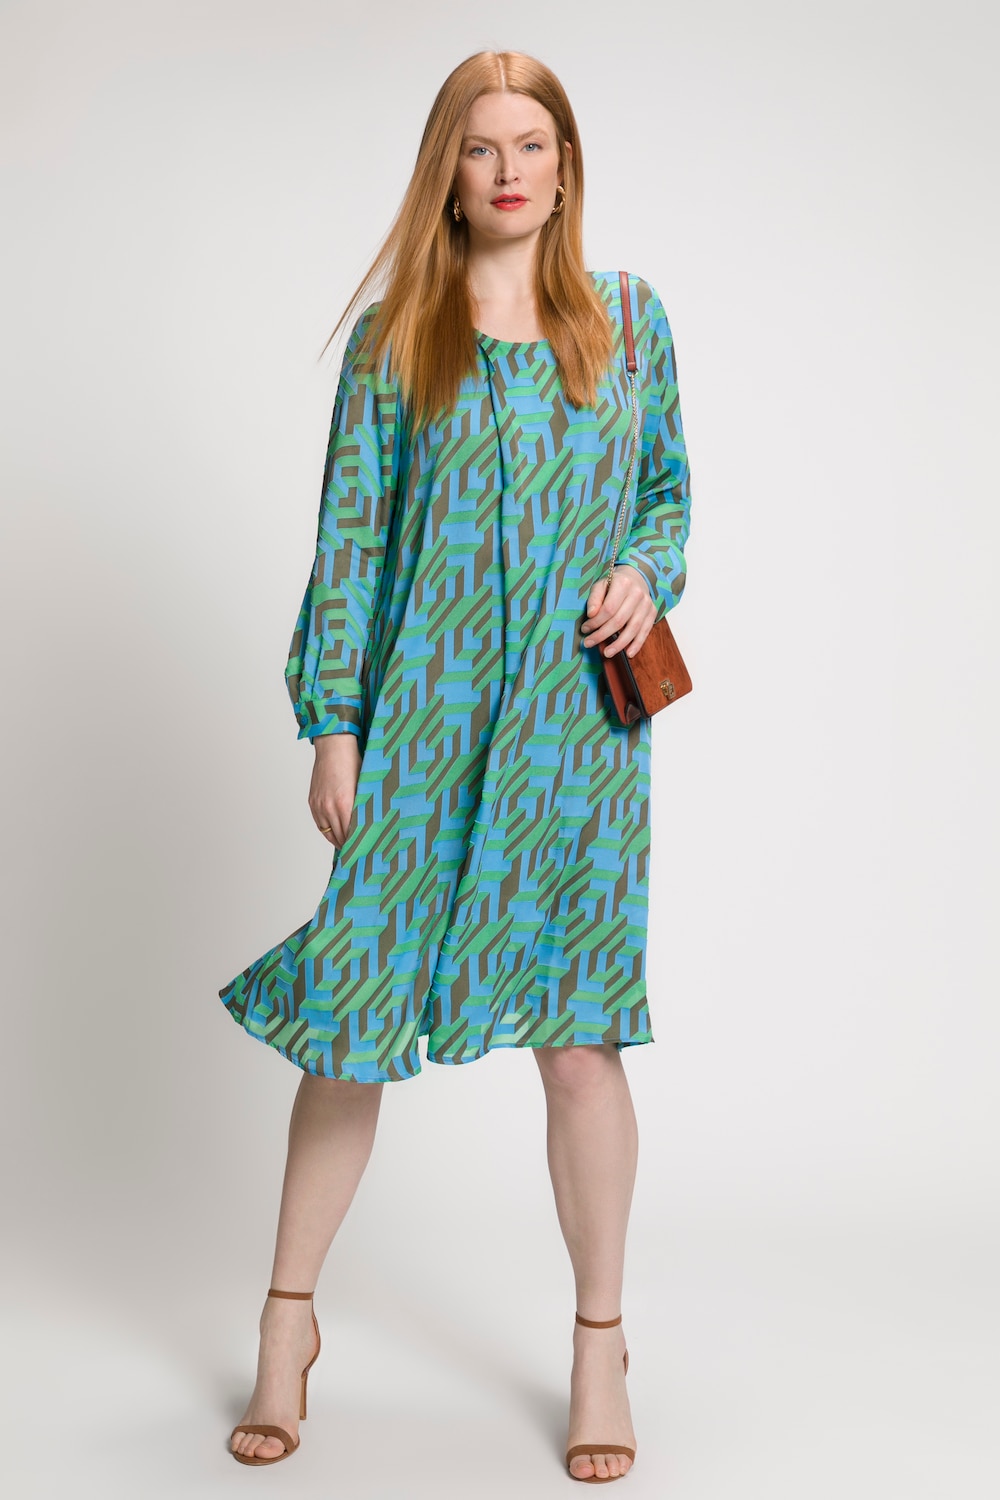 Plus Size Optic Print Burnout Long Sleeve Layer Dress, Woman, turquoise, size: 16/18, viscose/polyester, Ulla Popken